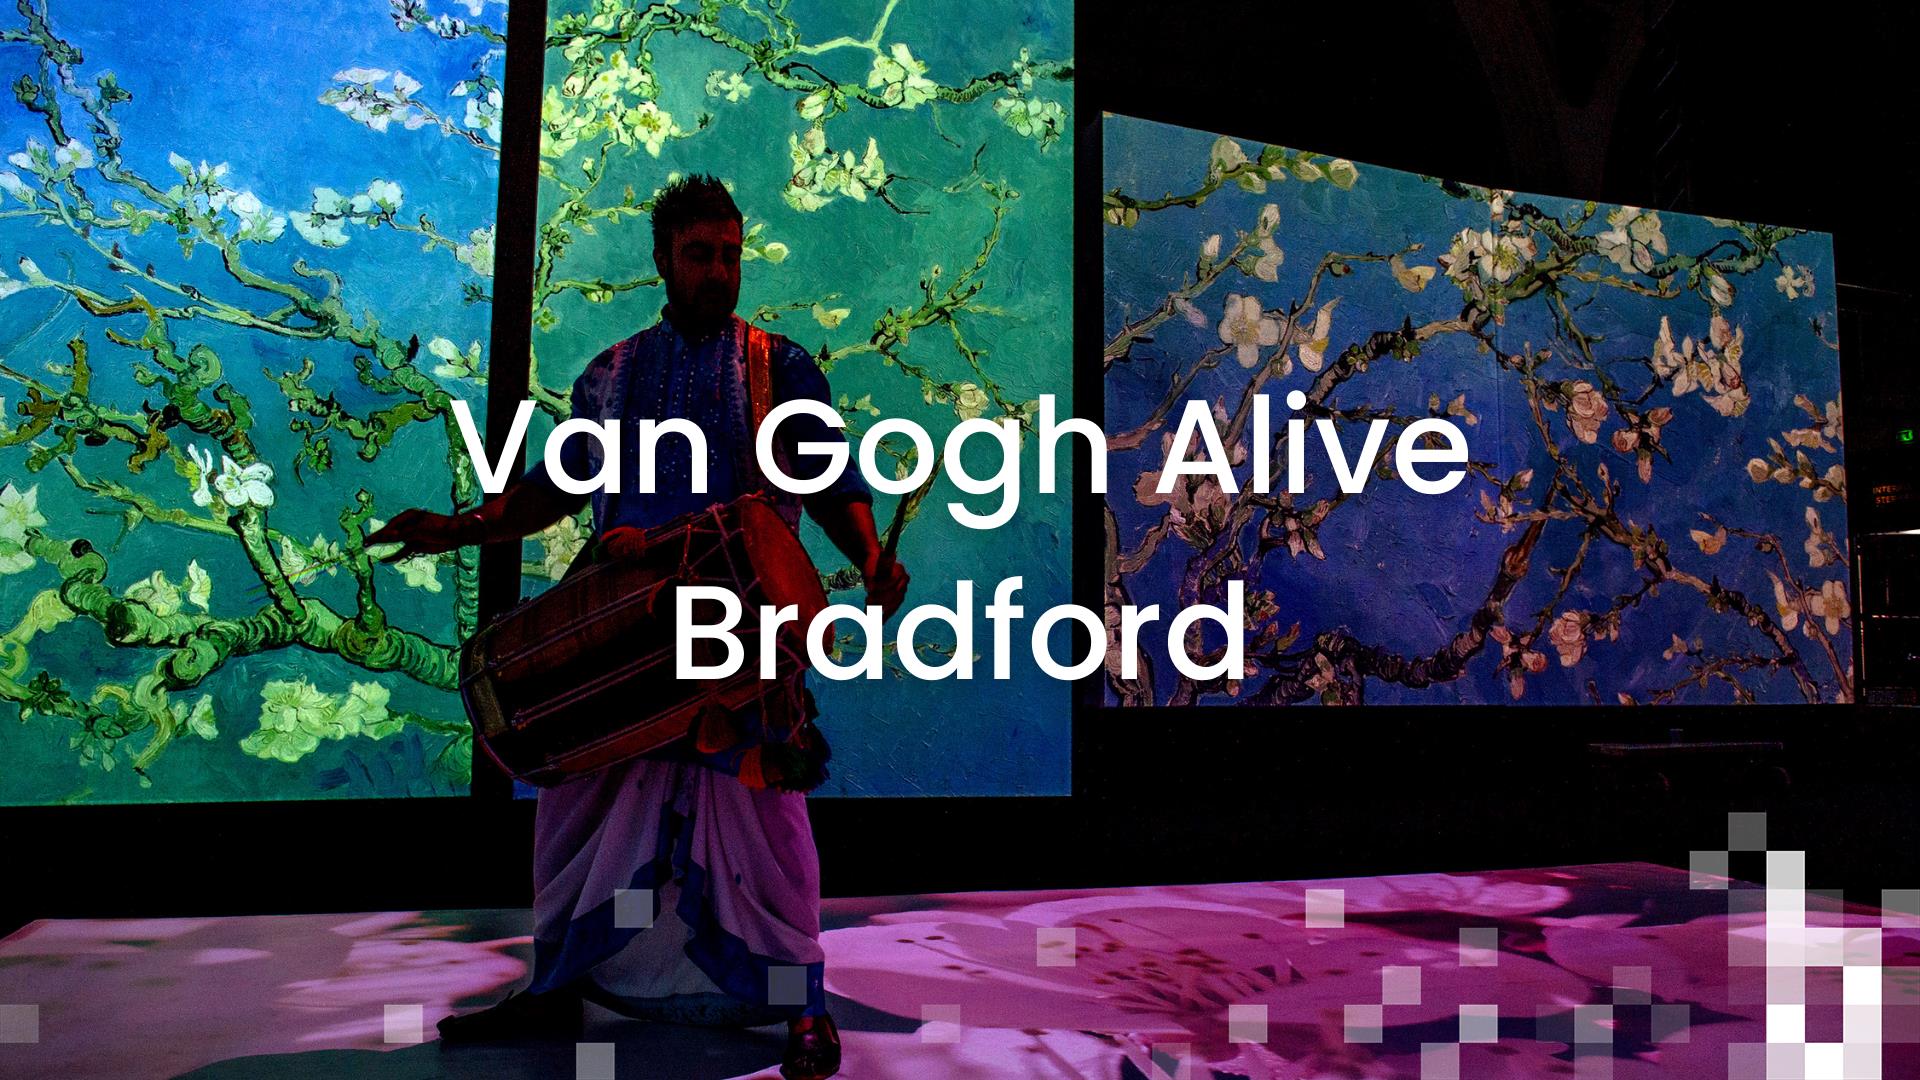 Van Gogh 'Alive' Experience in Bradford.